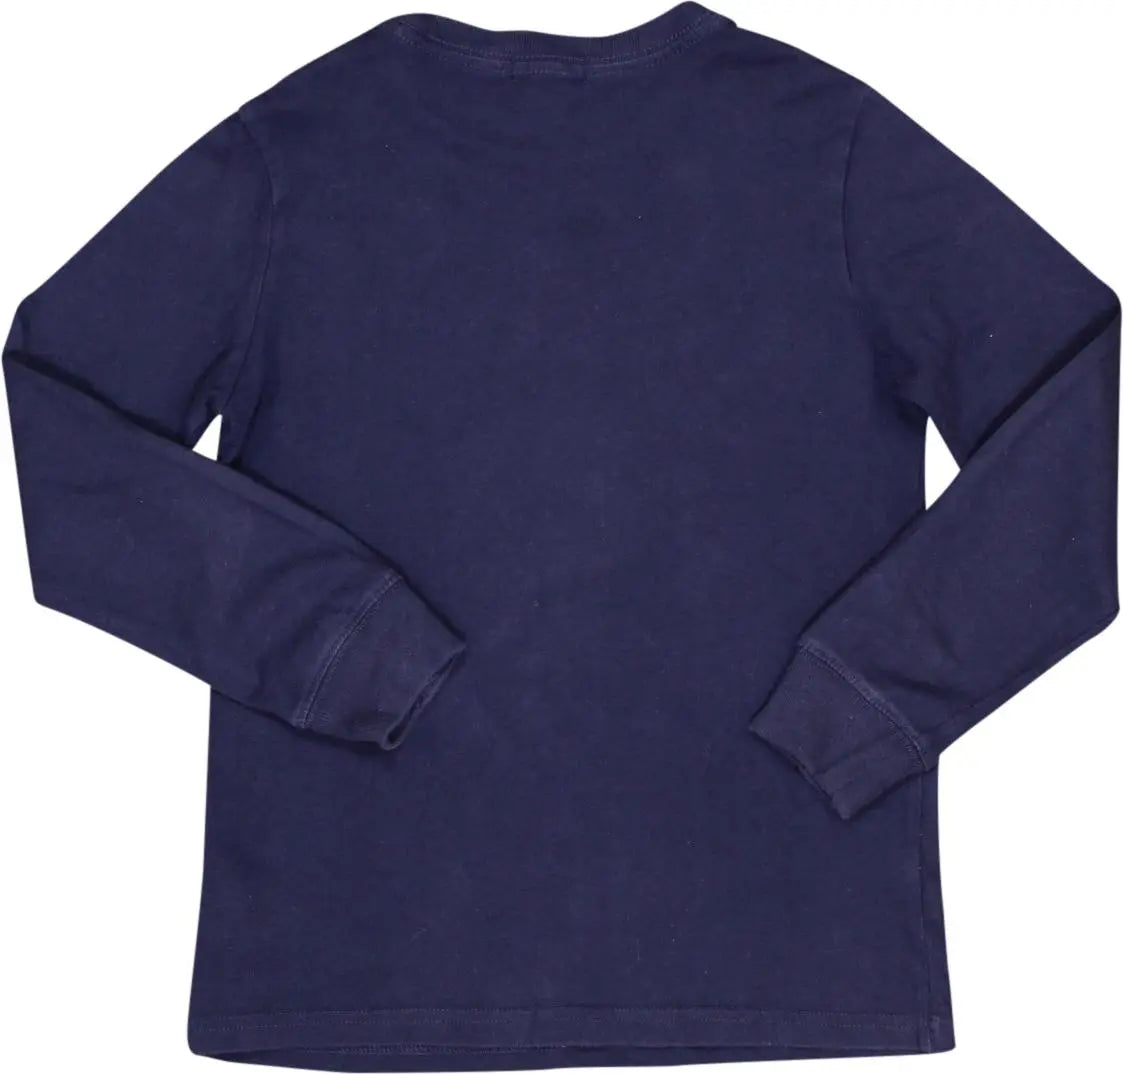 Ralph Lauren - Blue Shirt by Ralph Lauren- ThriftTale.com - Vintage and second handclothing